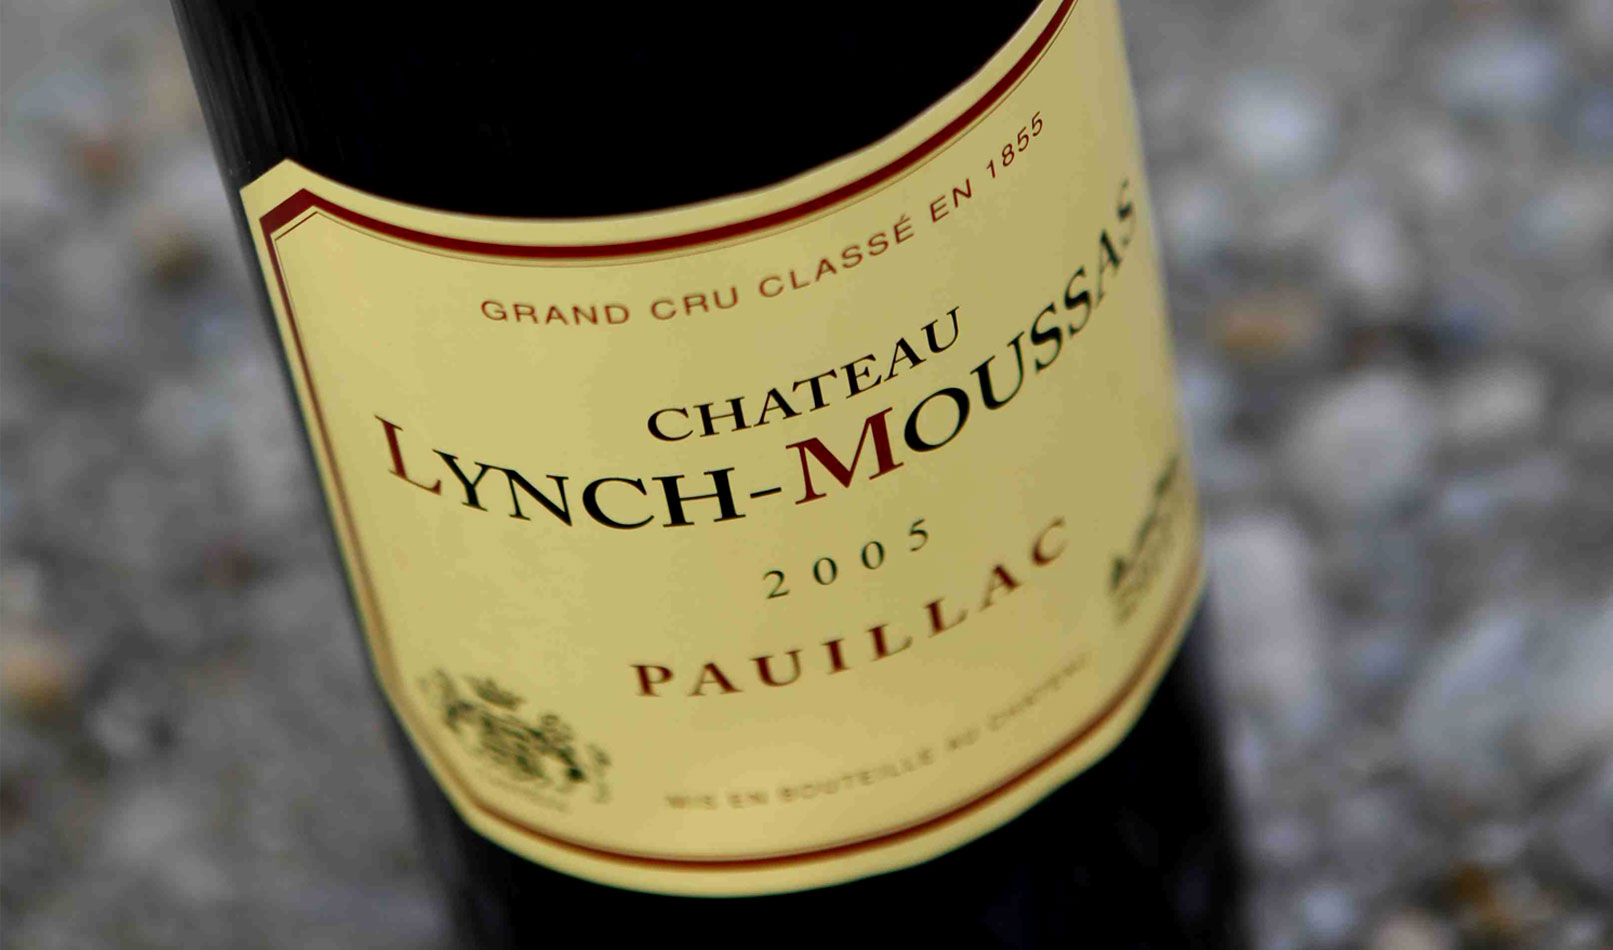 Grand Lynch classé Moussas Pauillac - Château Cru